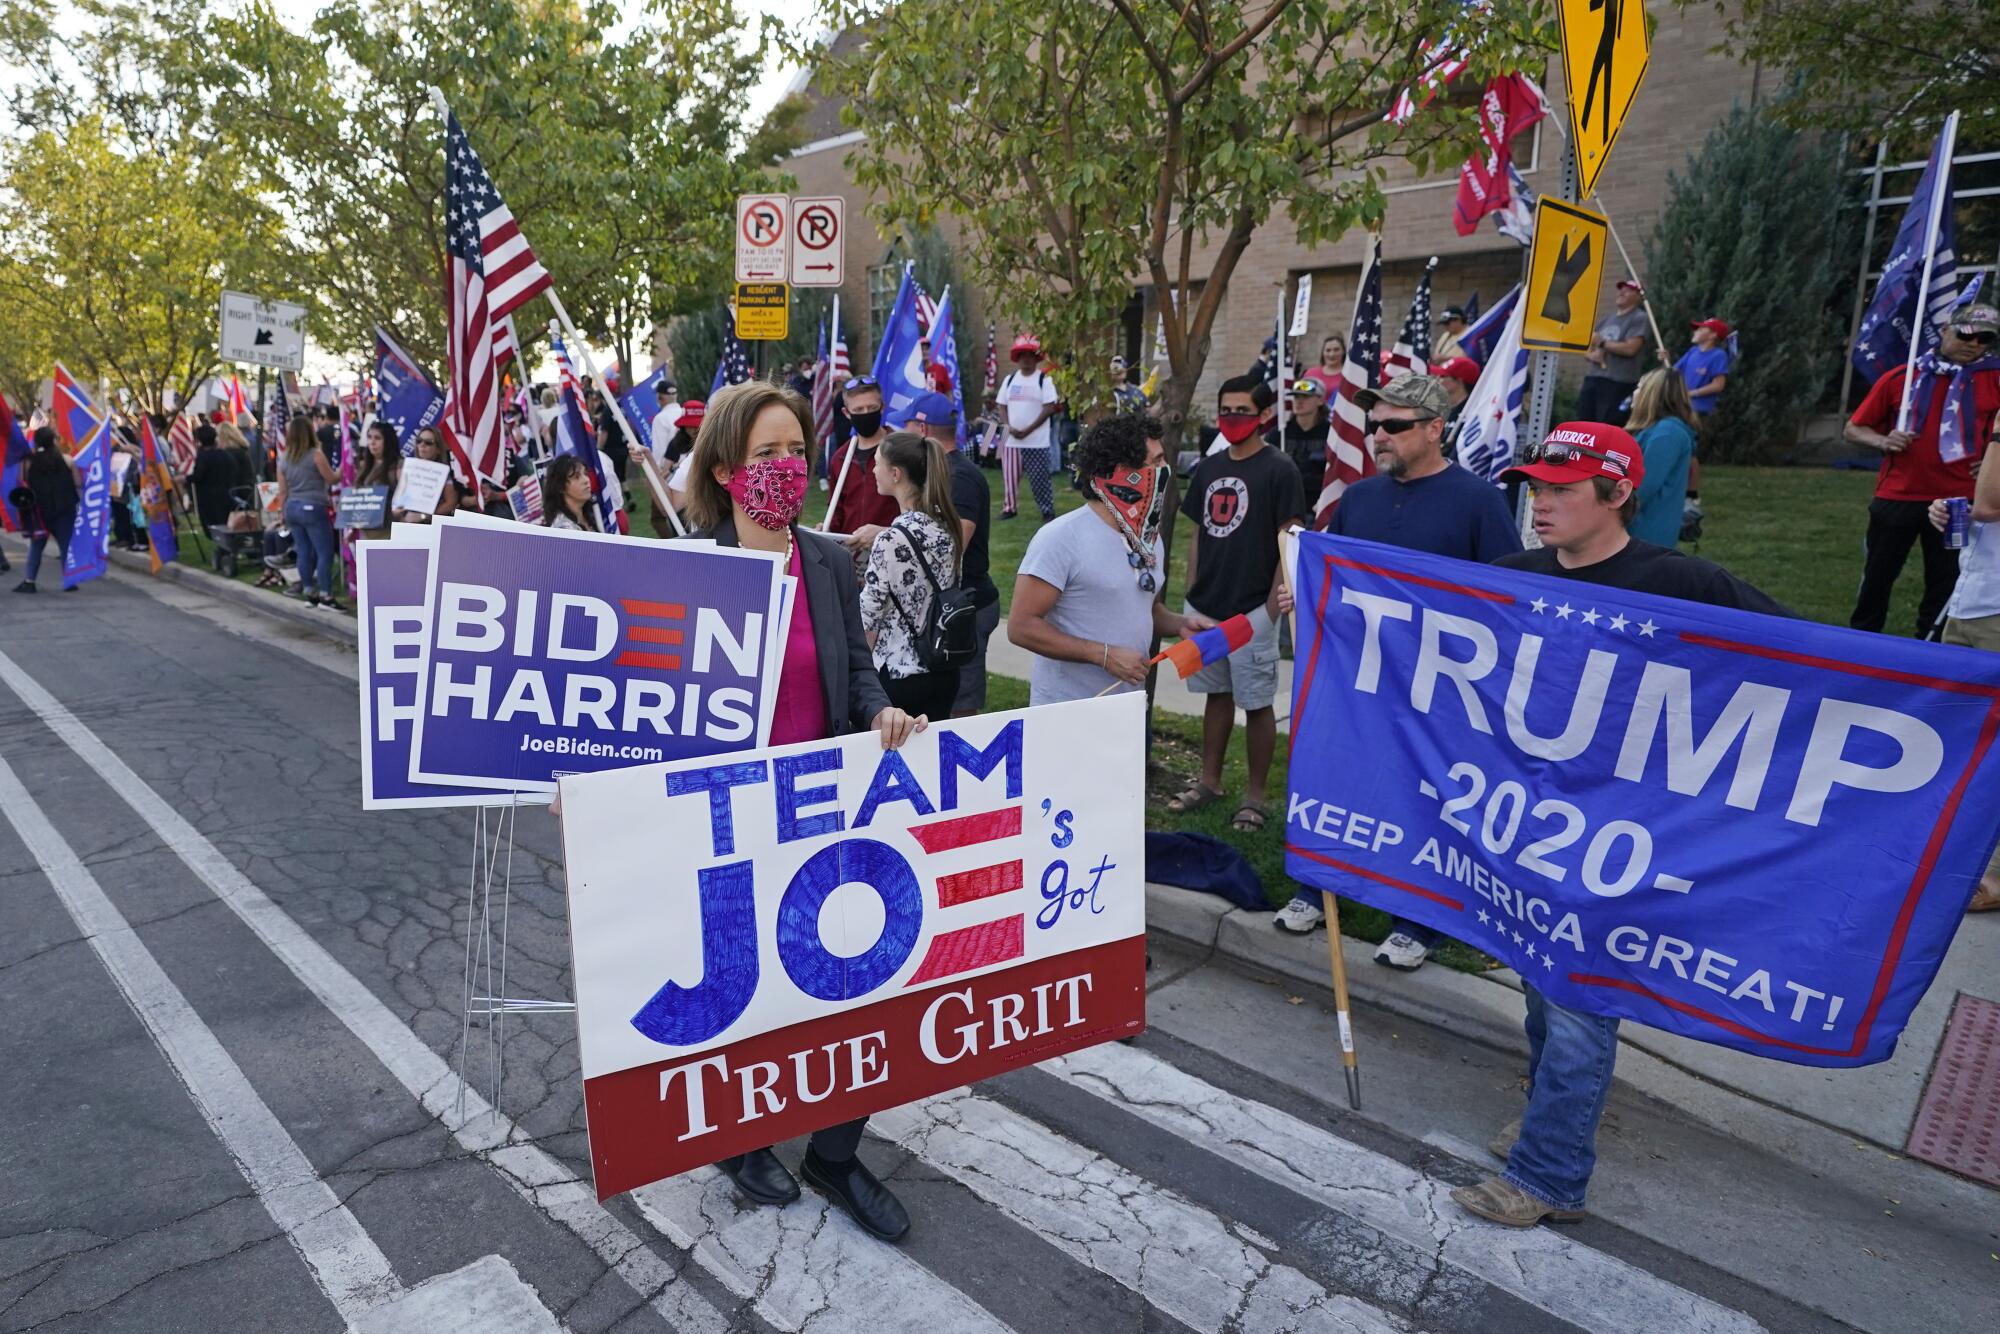 Demonstrators hold signs reading Biden-Harris, Team Joe's Got True Grit and Trump 2020 Keep America Great